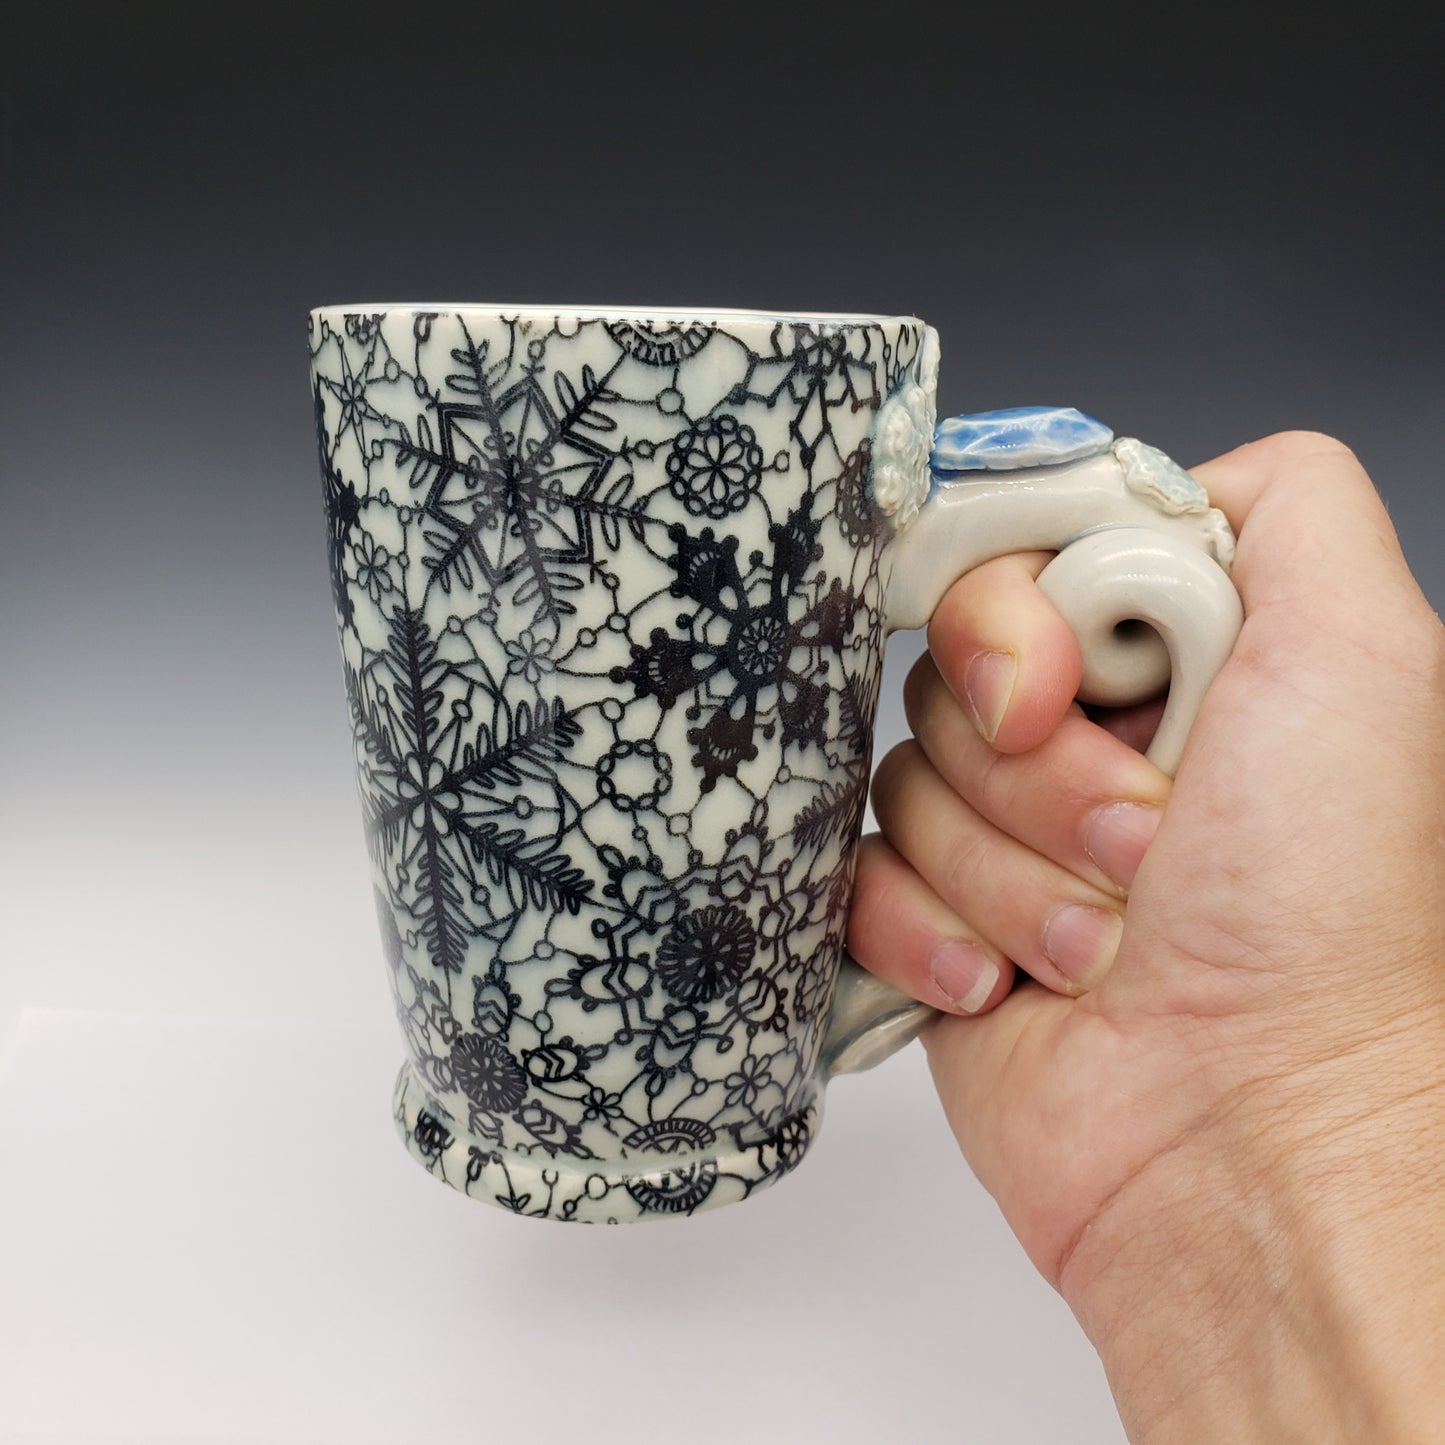 Light blue vintage lace snowflake mug with detailed twist handle